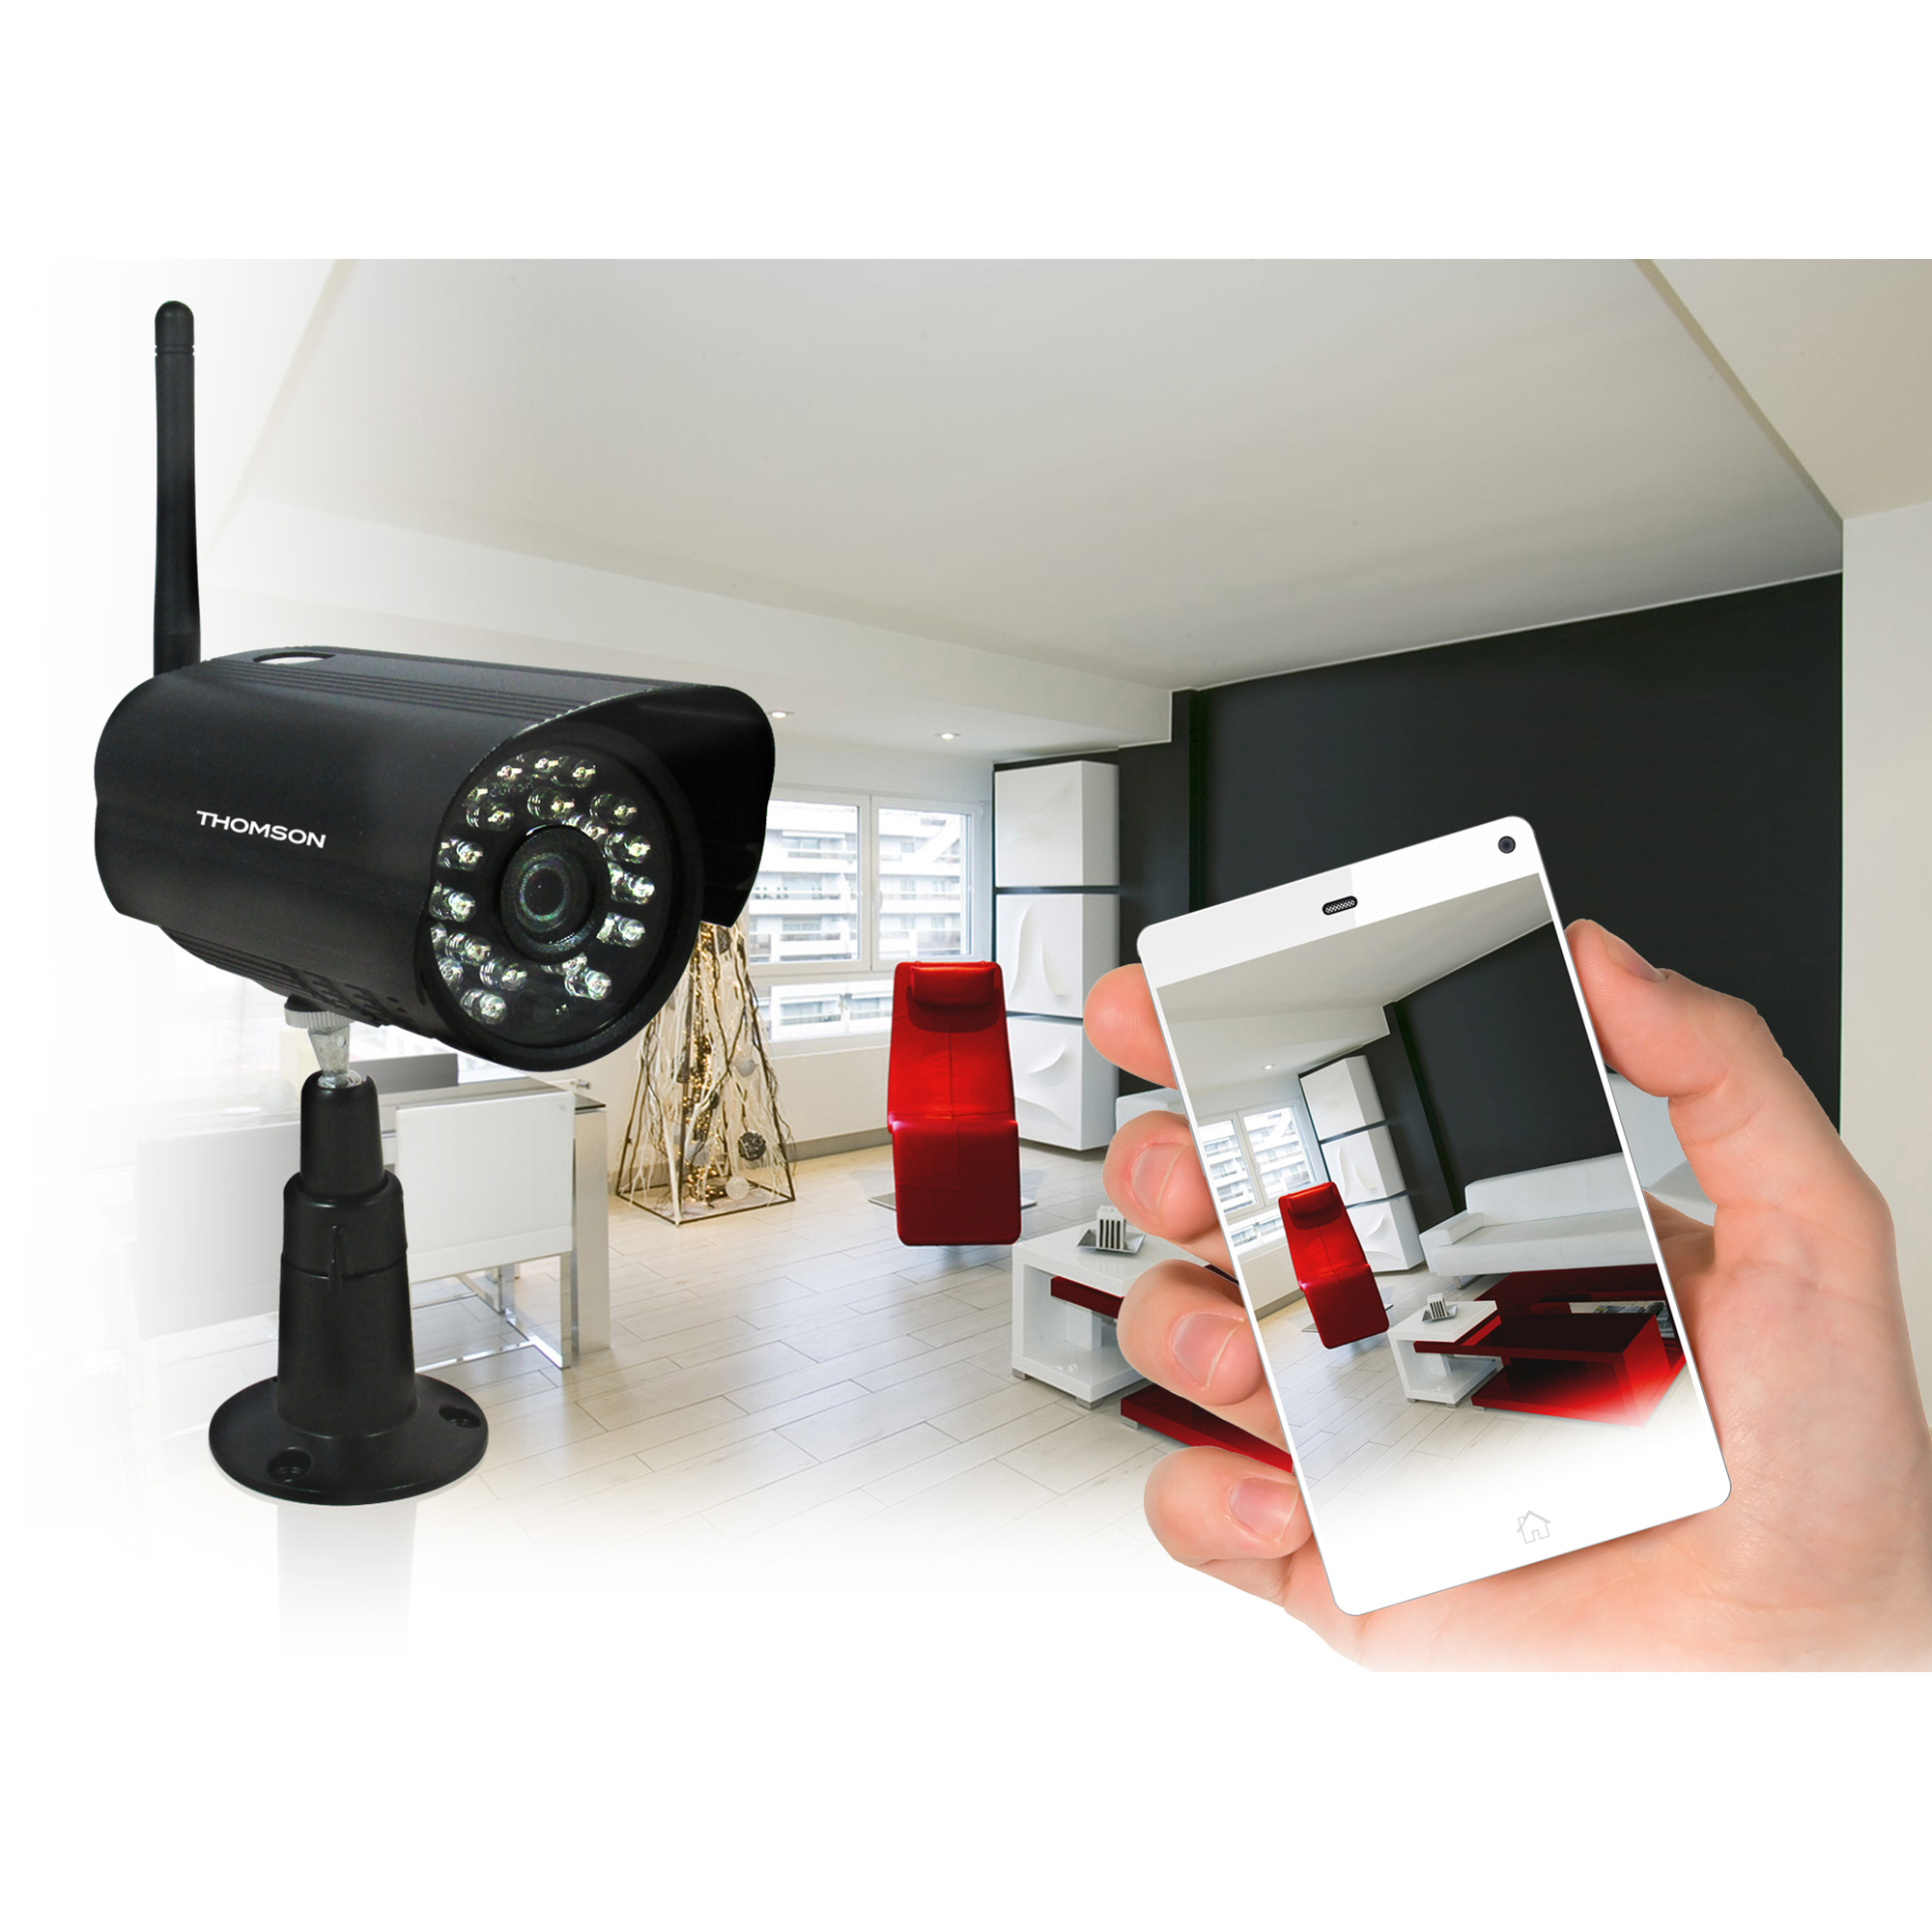 qnap surveillance station ip camera compatibil